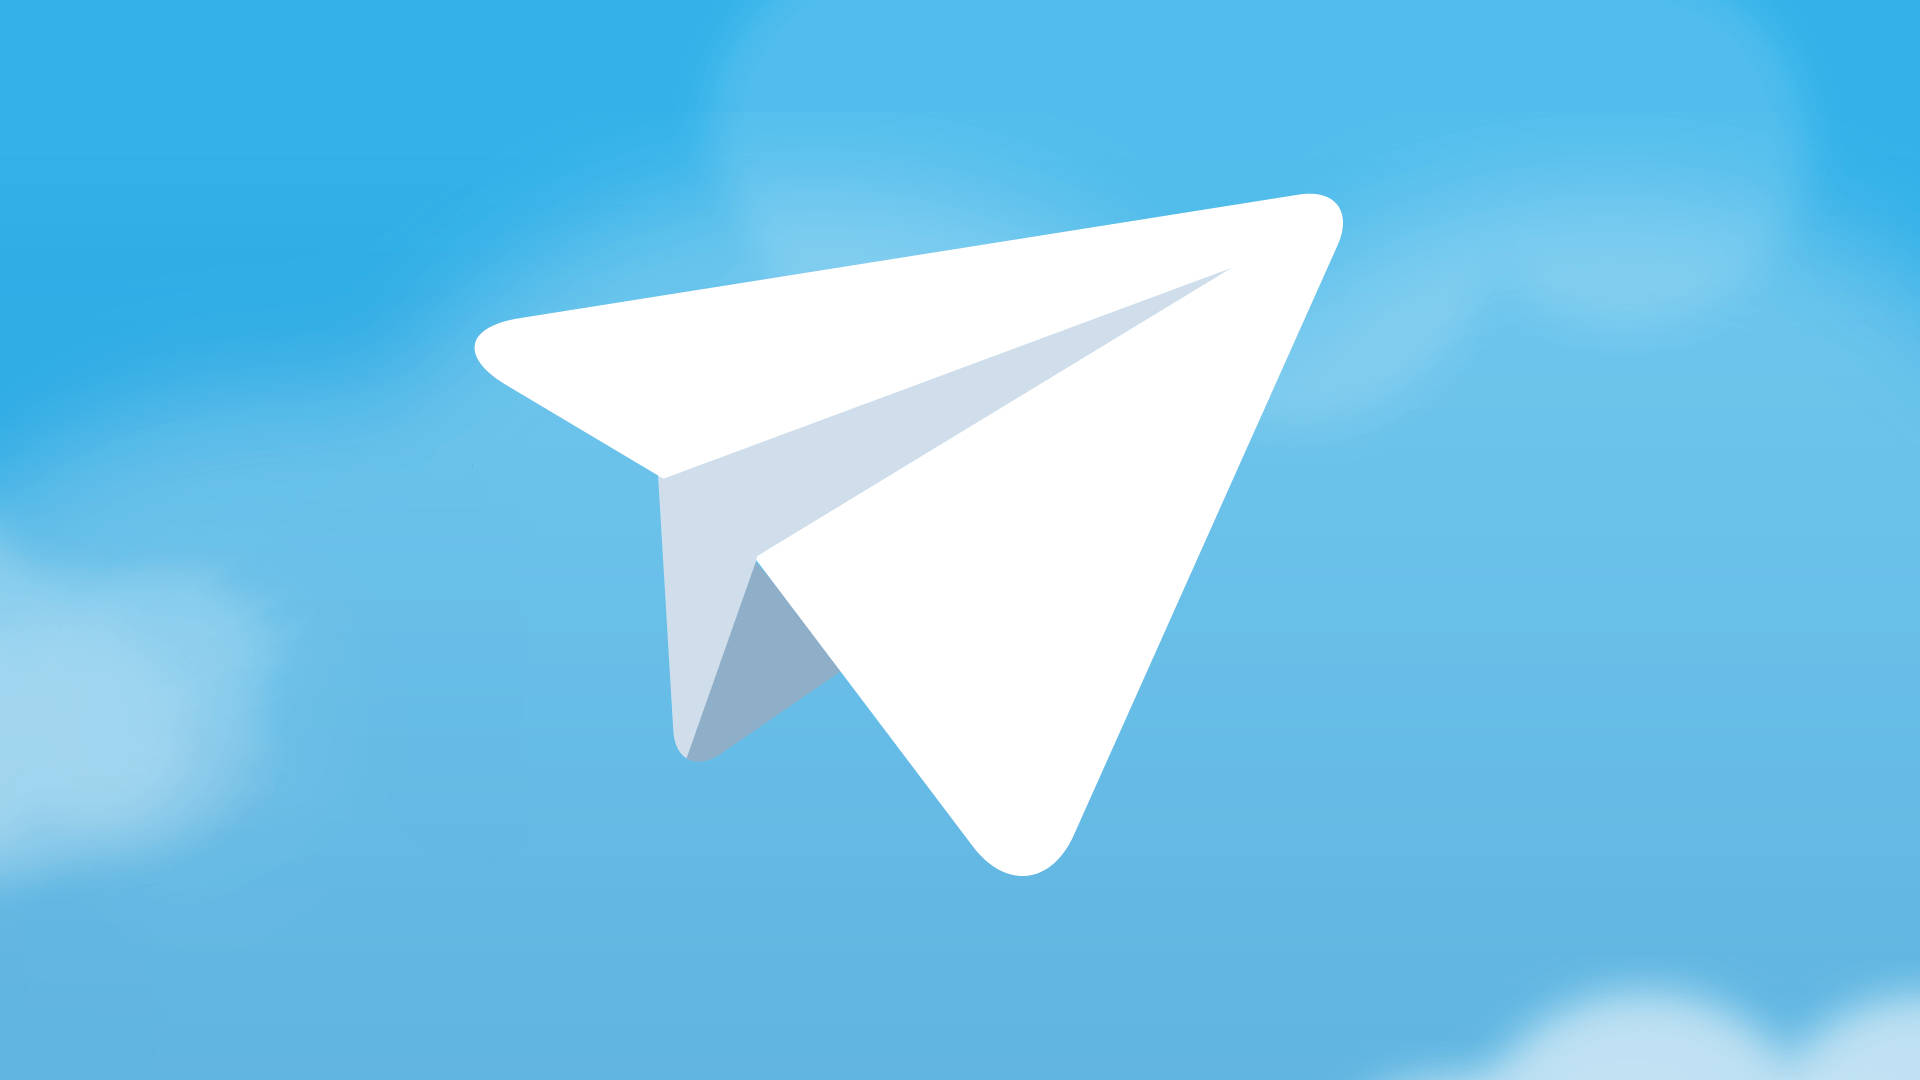 Telegramcon Zoom En Un Avión. Fondo de pantalla